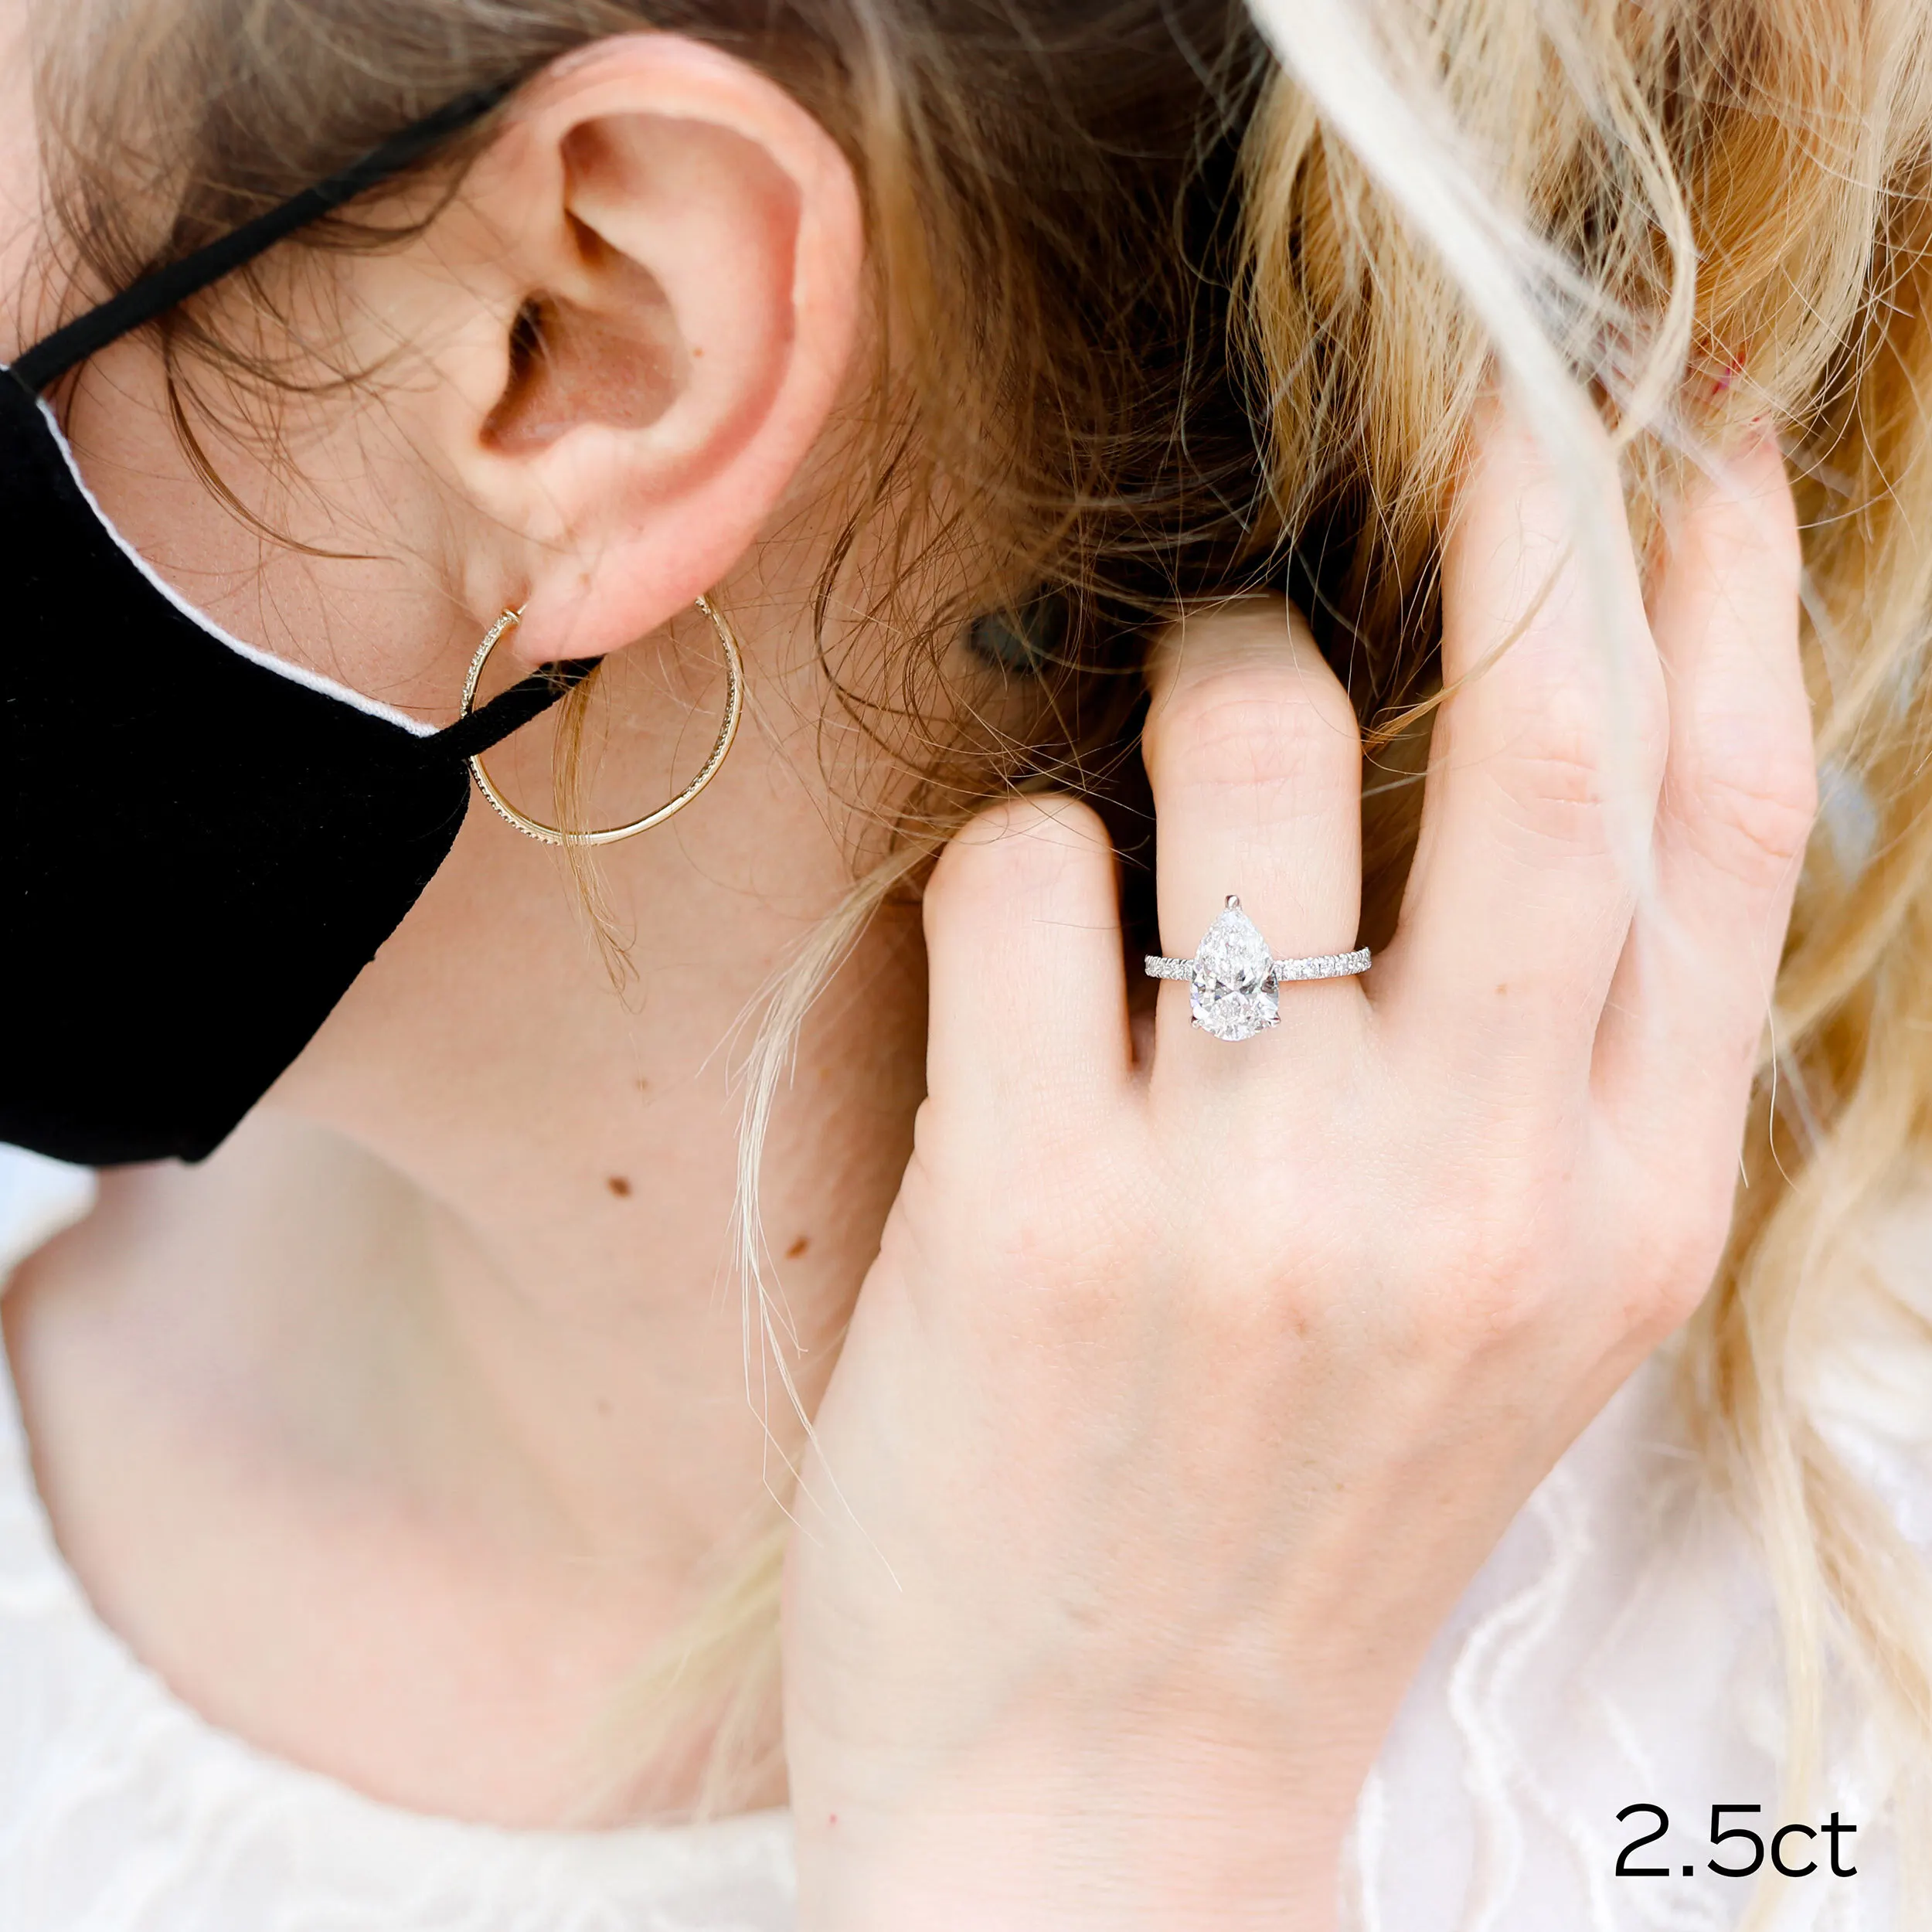 White Gold 2.5 Carat Pear Lab Created Diamond Ring with Diamond Band Ada Diamonds Design AD-211 on Hand